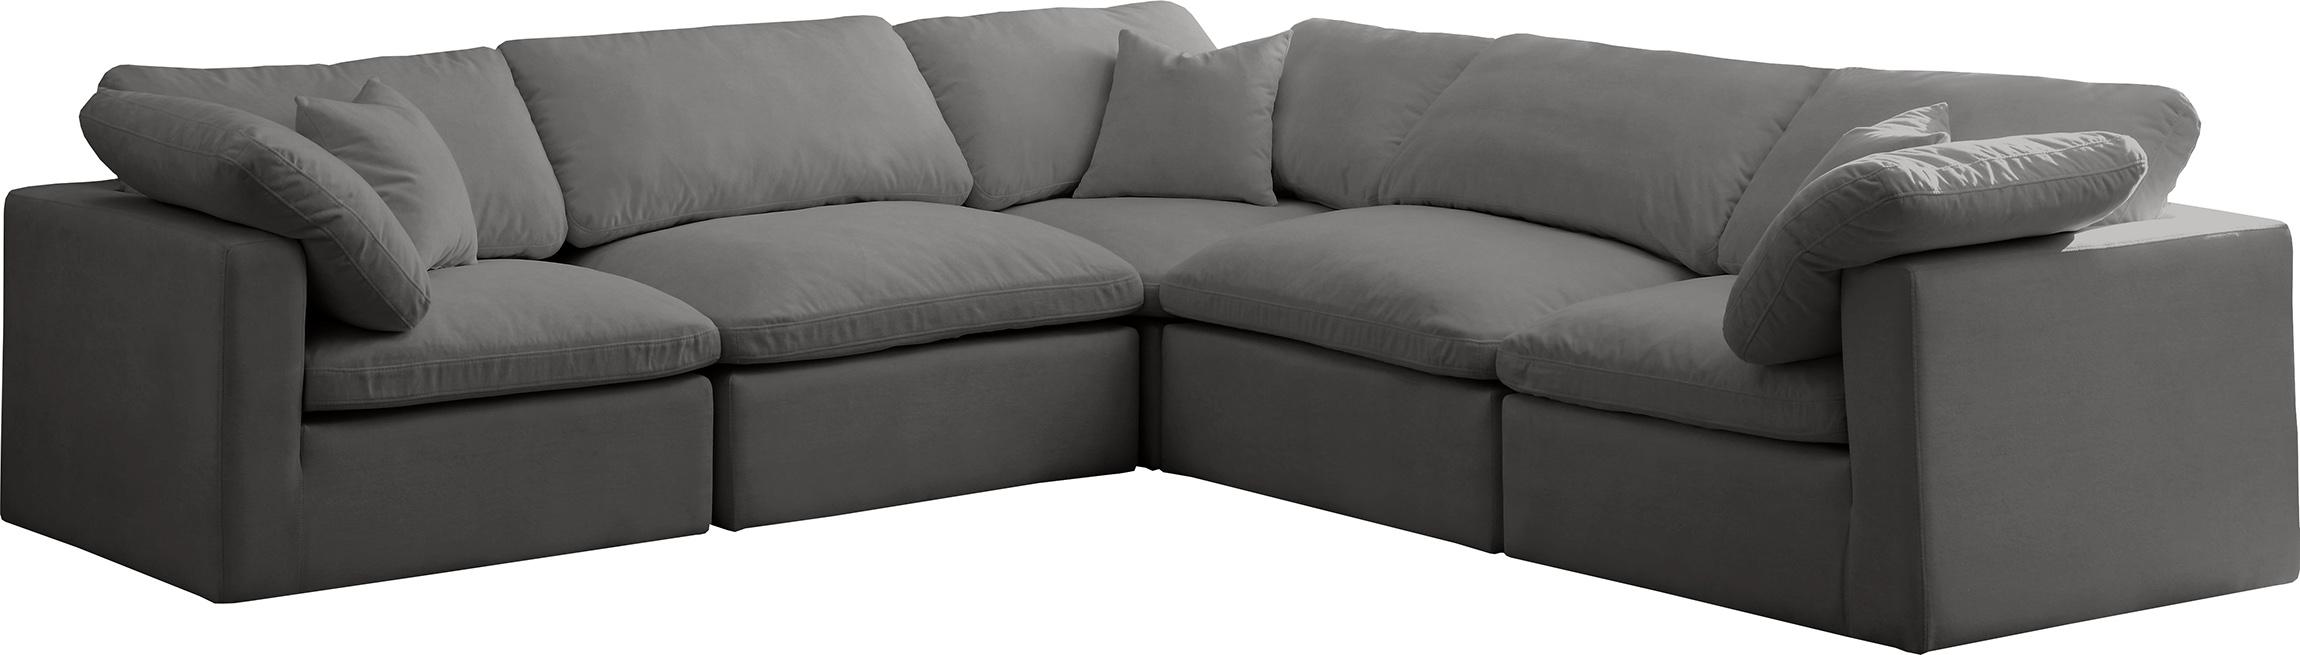 Contemporary, Modern Modular Sectional Sofa 602Grey-Sec5C 602Grey-Sec5C in Gray Fabric